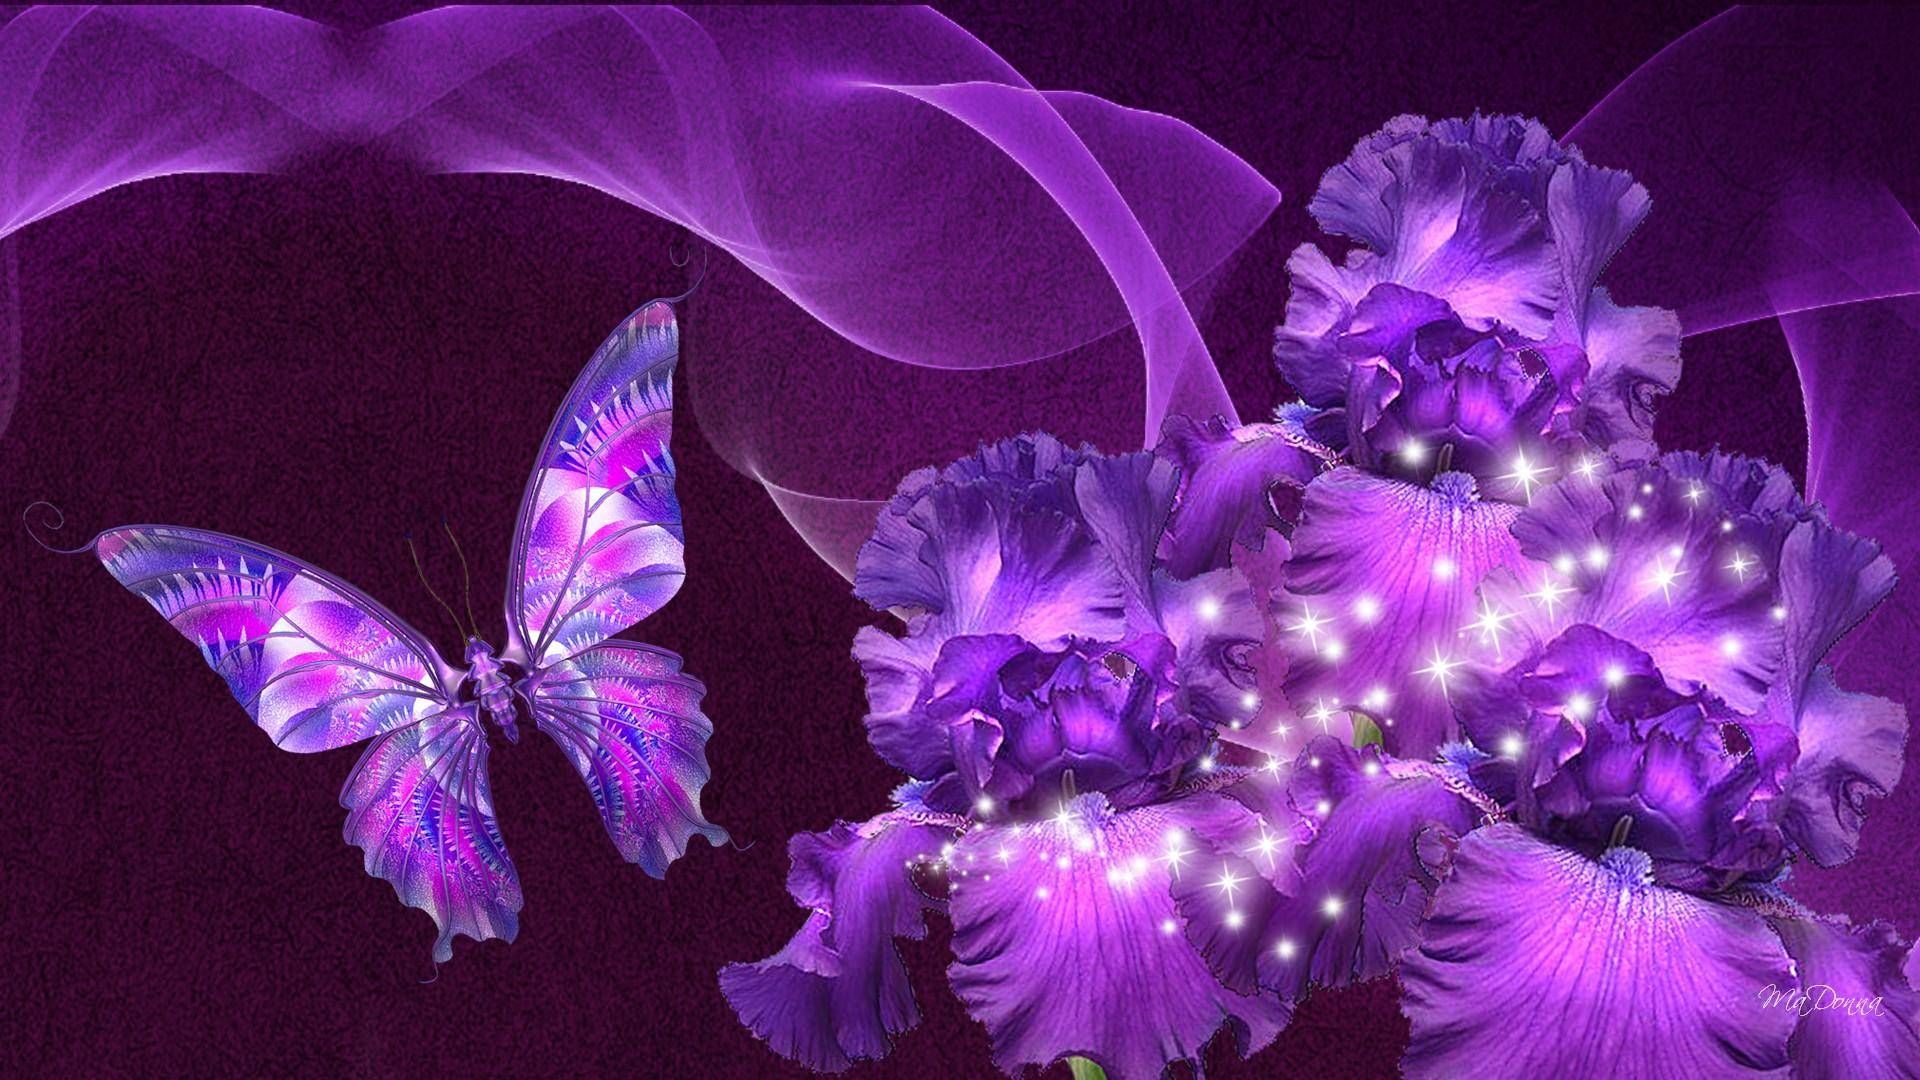 beautiful purple flowers images - Bing Images | butterflies ...